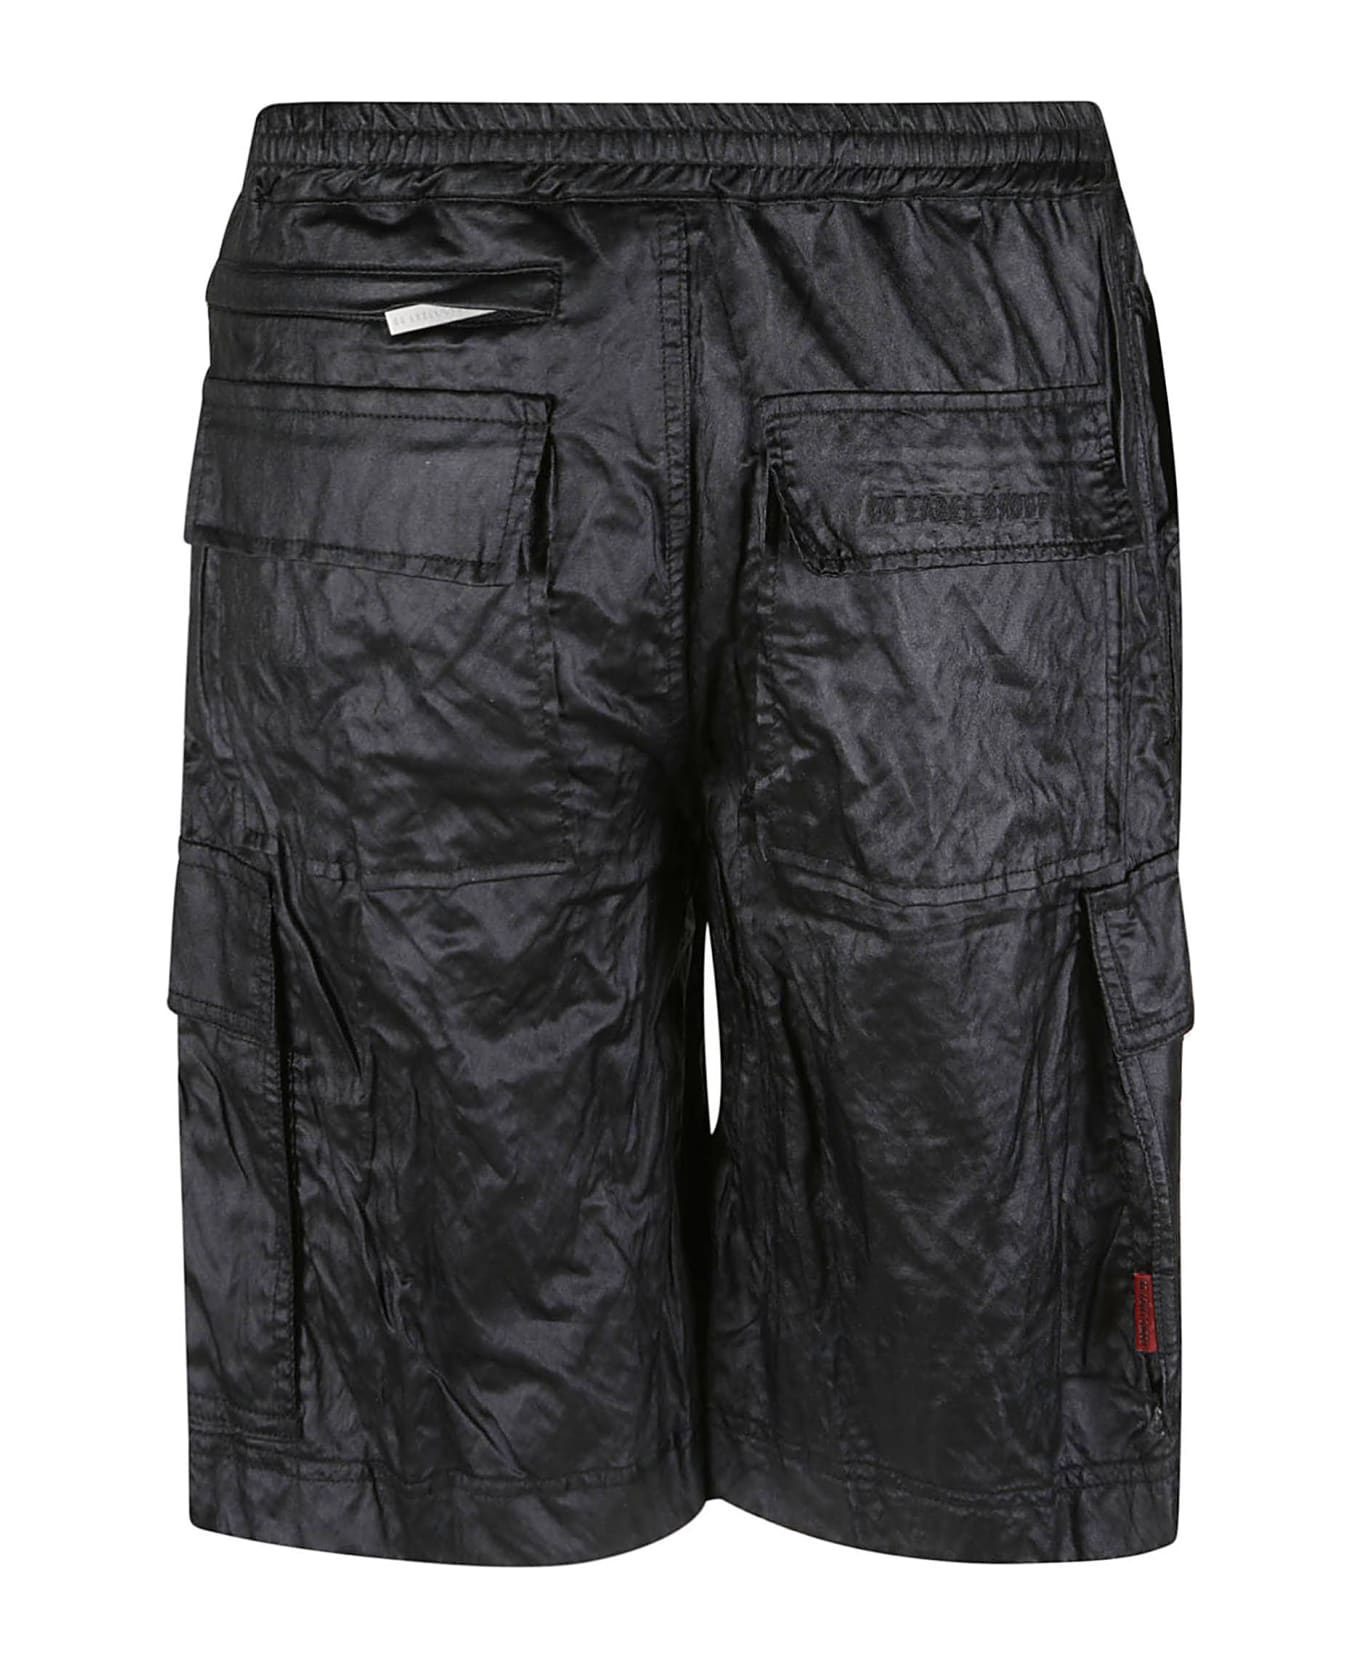 44 Label Group Cargo Ribbed Shorts - Black ショートパンツ